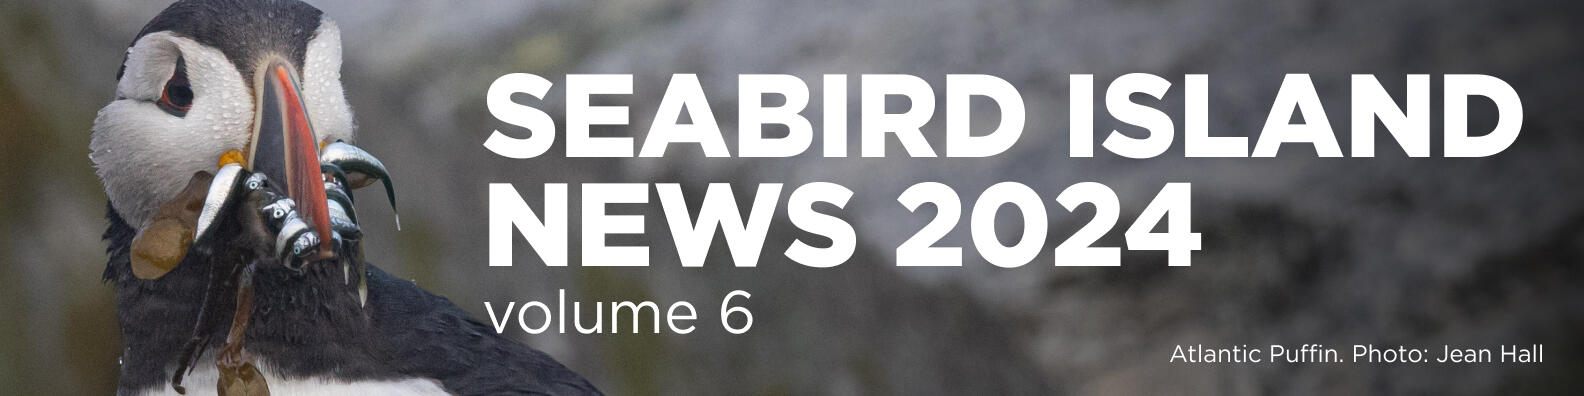 Seabird Island News Banner - Volume 06